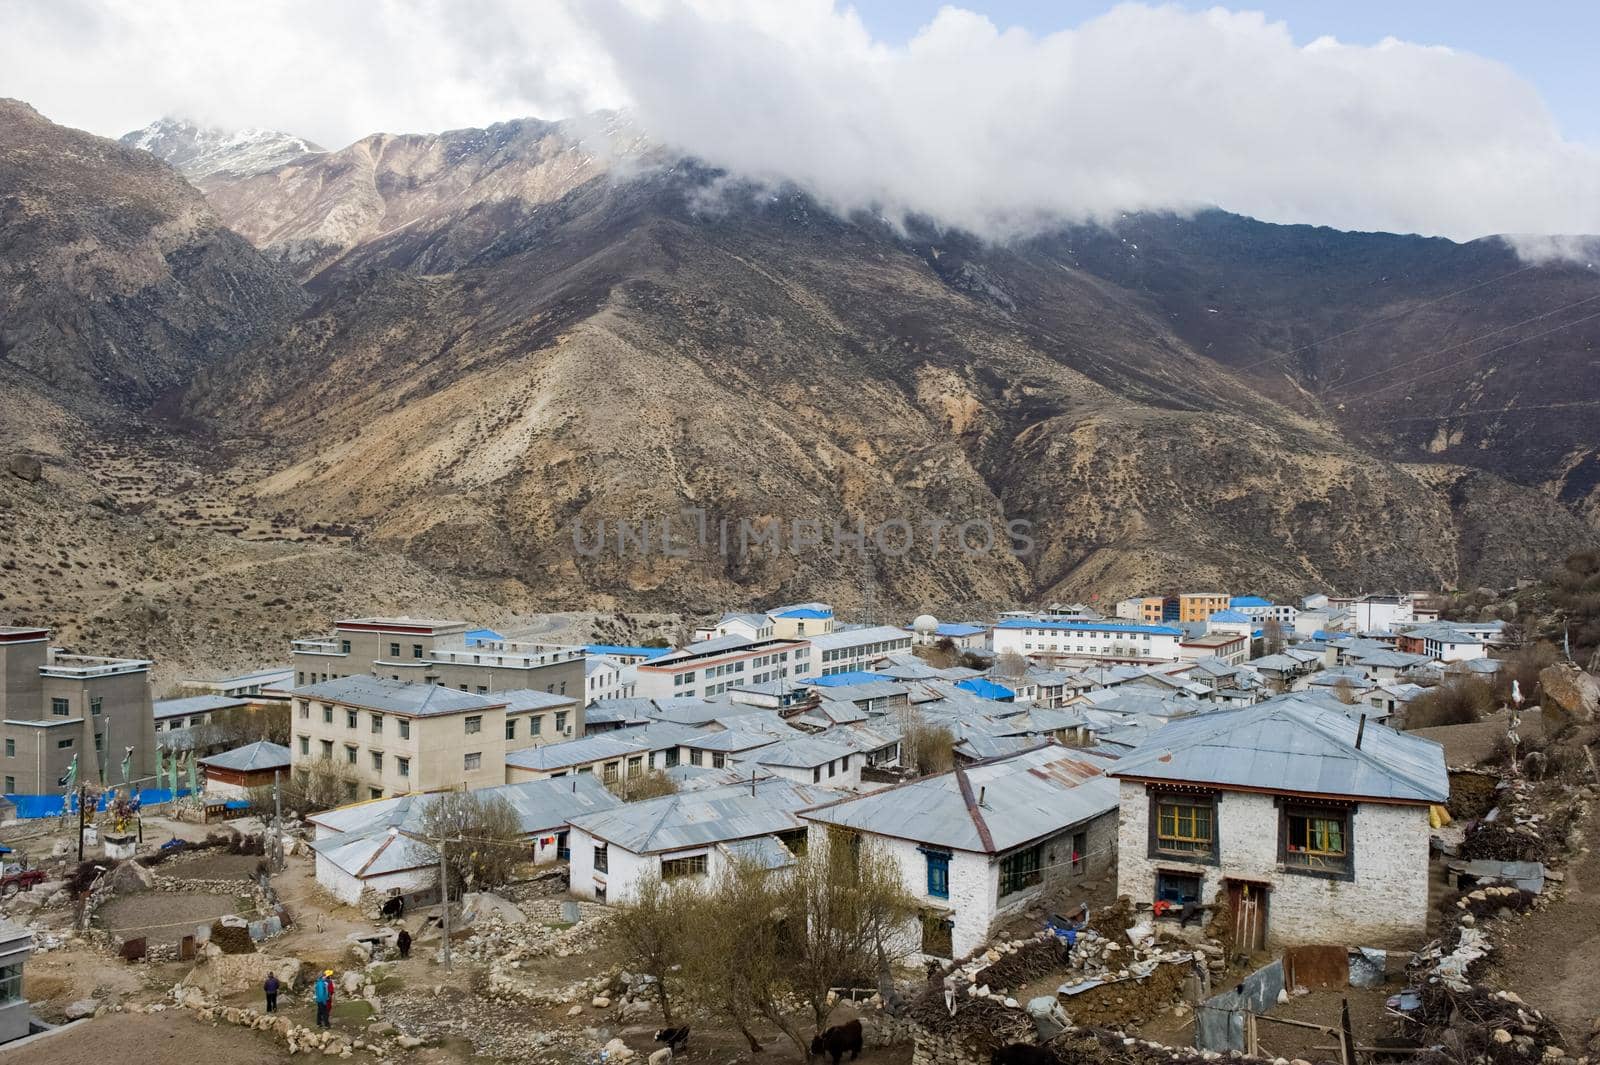 A village in Tibet, mountain village. by DePo